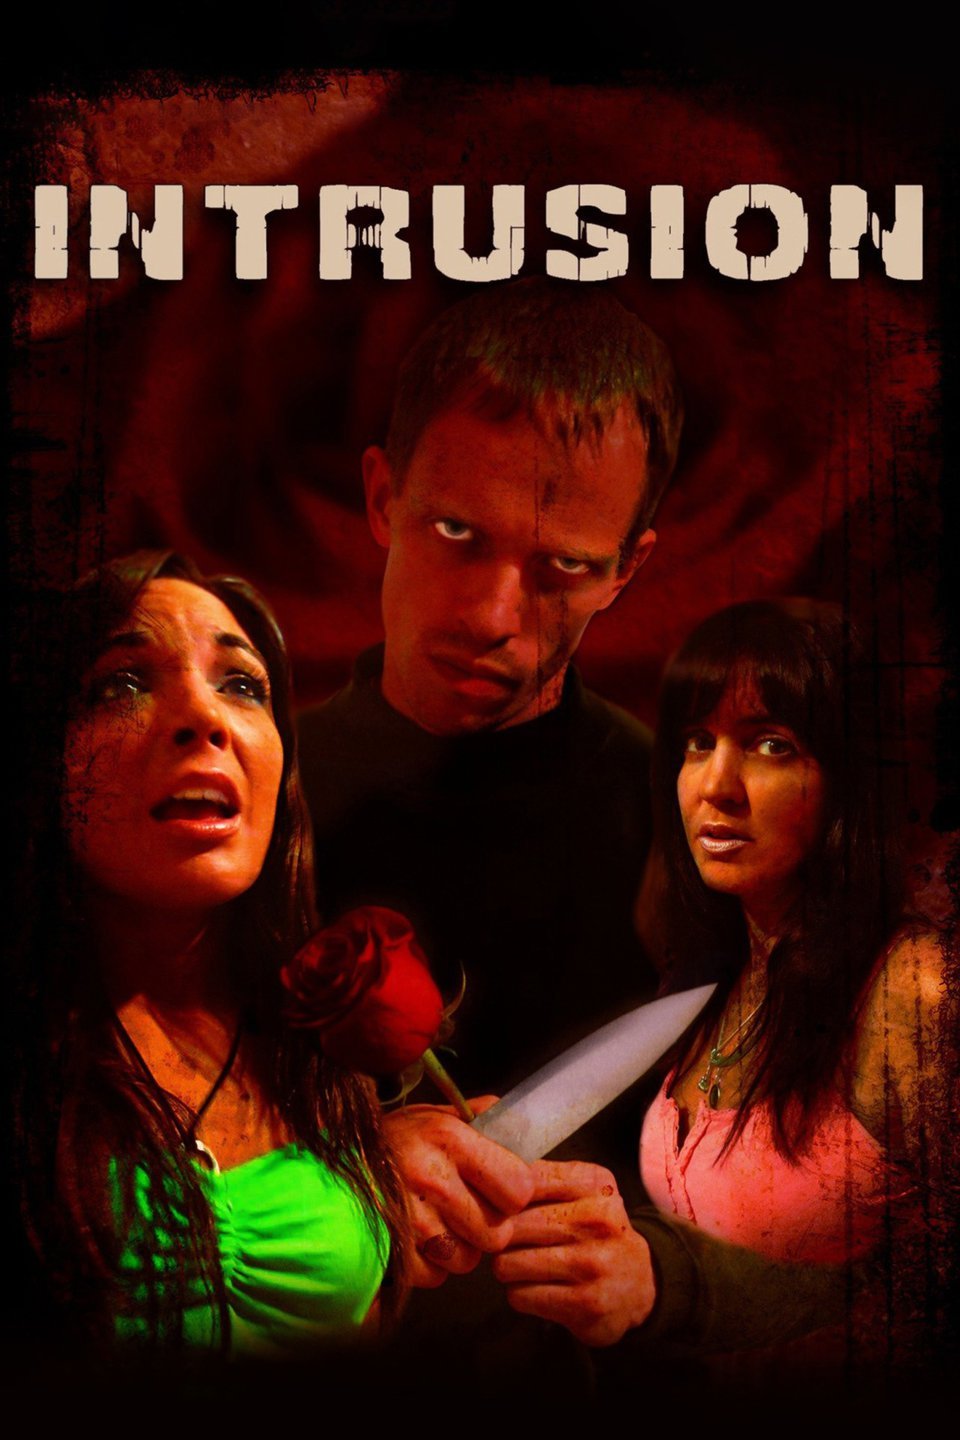 Intrusion movie